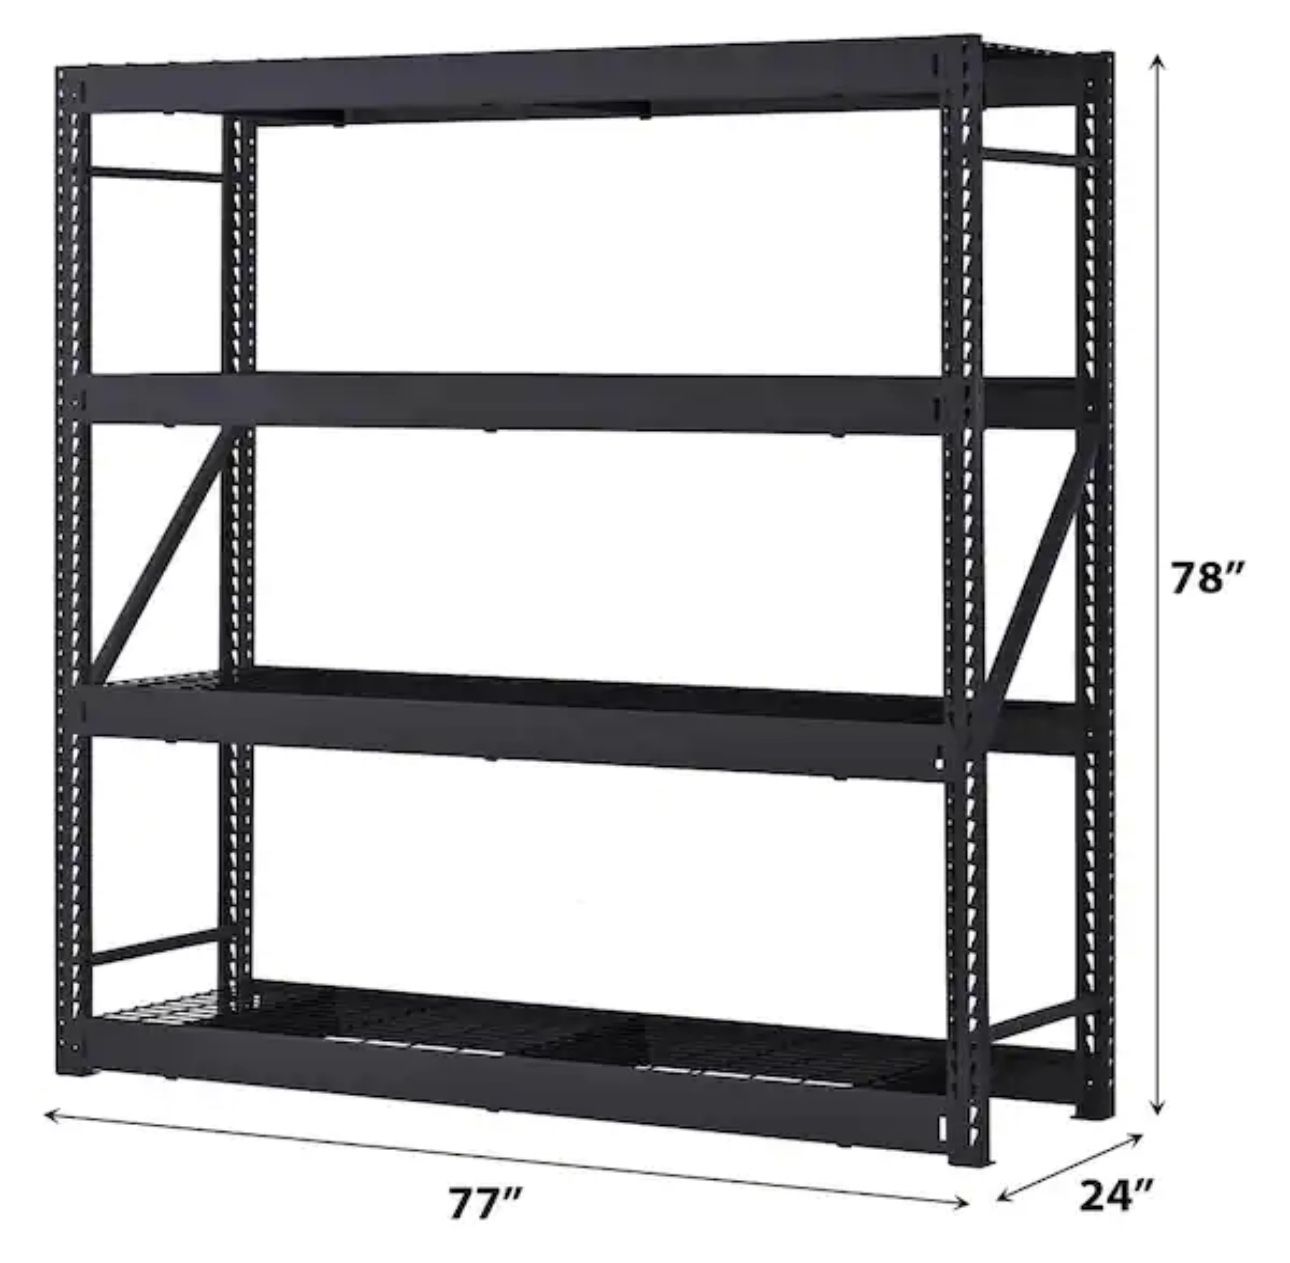 Husky Steel Freestanding Garage Storage Shelving Unit - 4 Tier